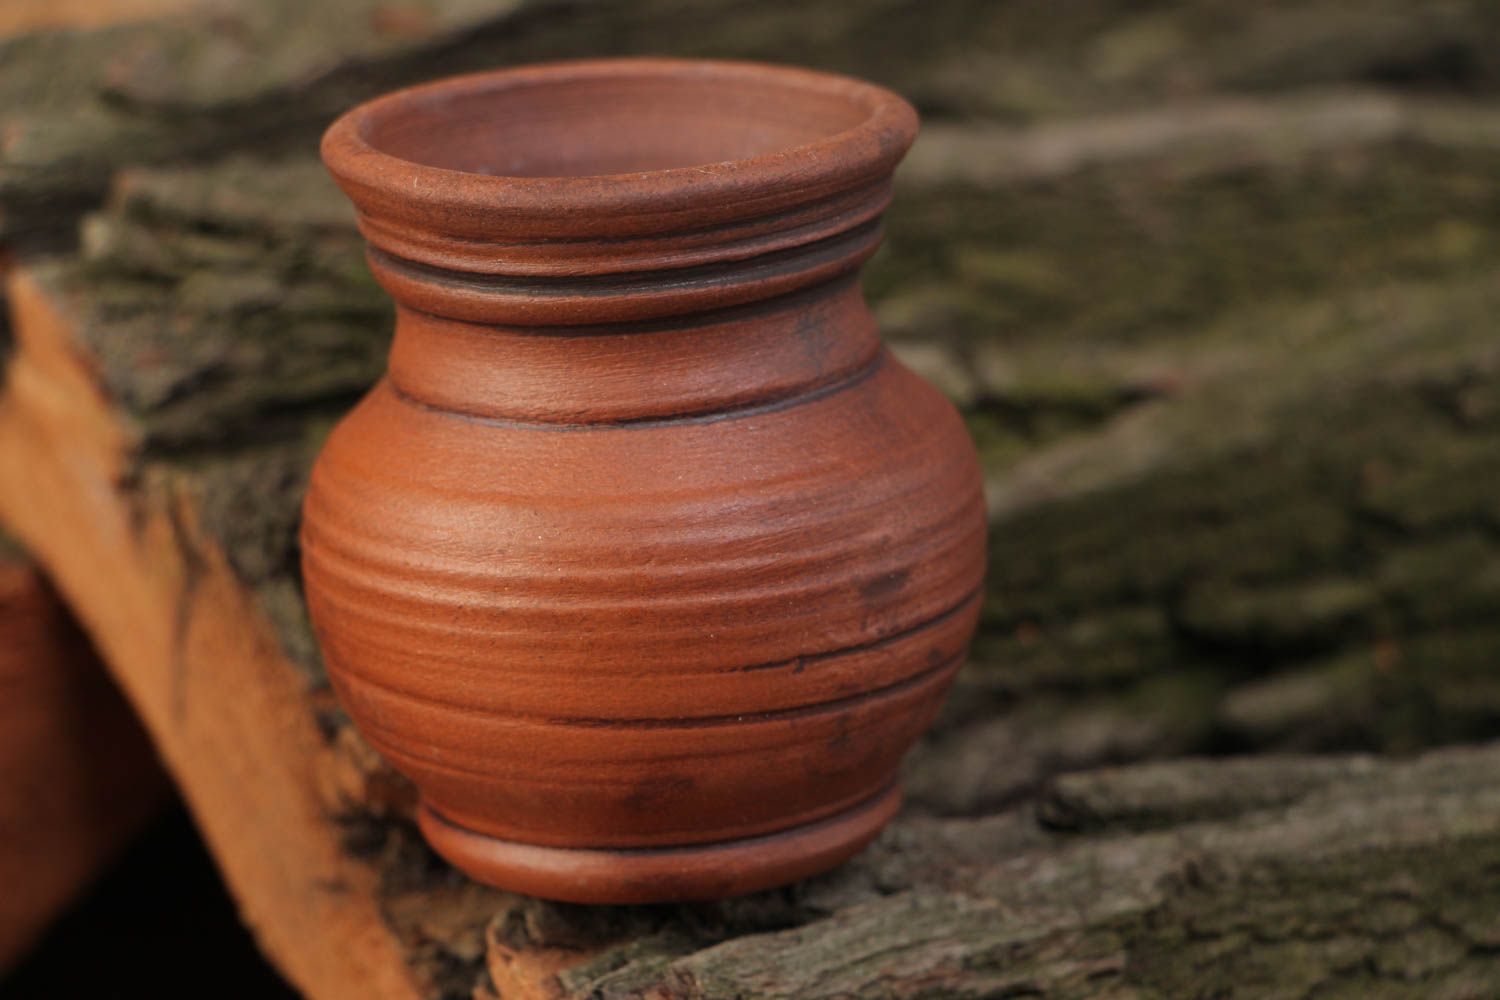 10 oz ceramic creamer jug in terracotta color 0,13 lb photo 1